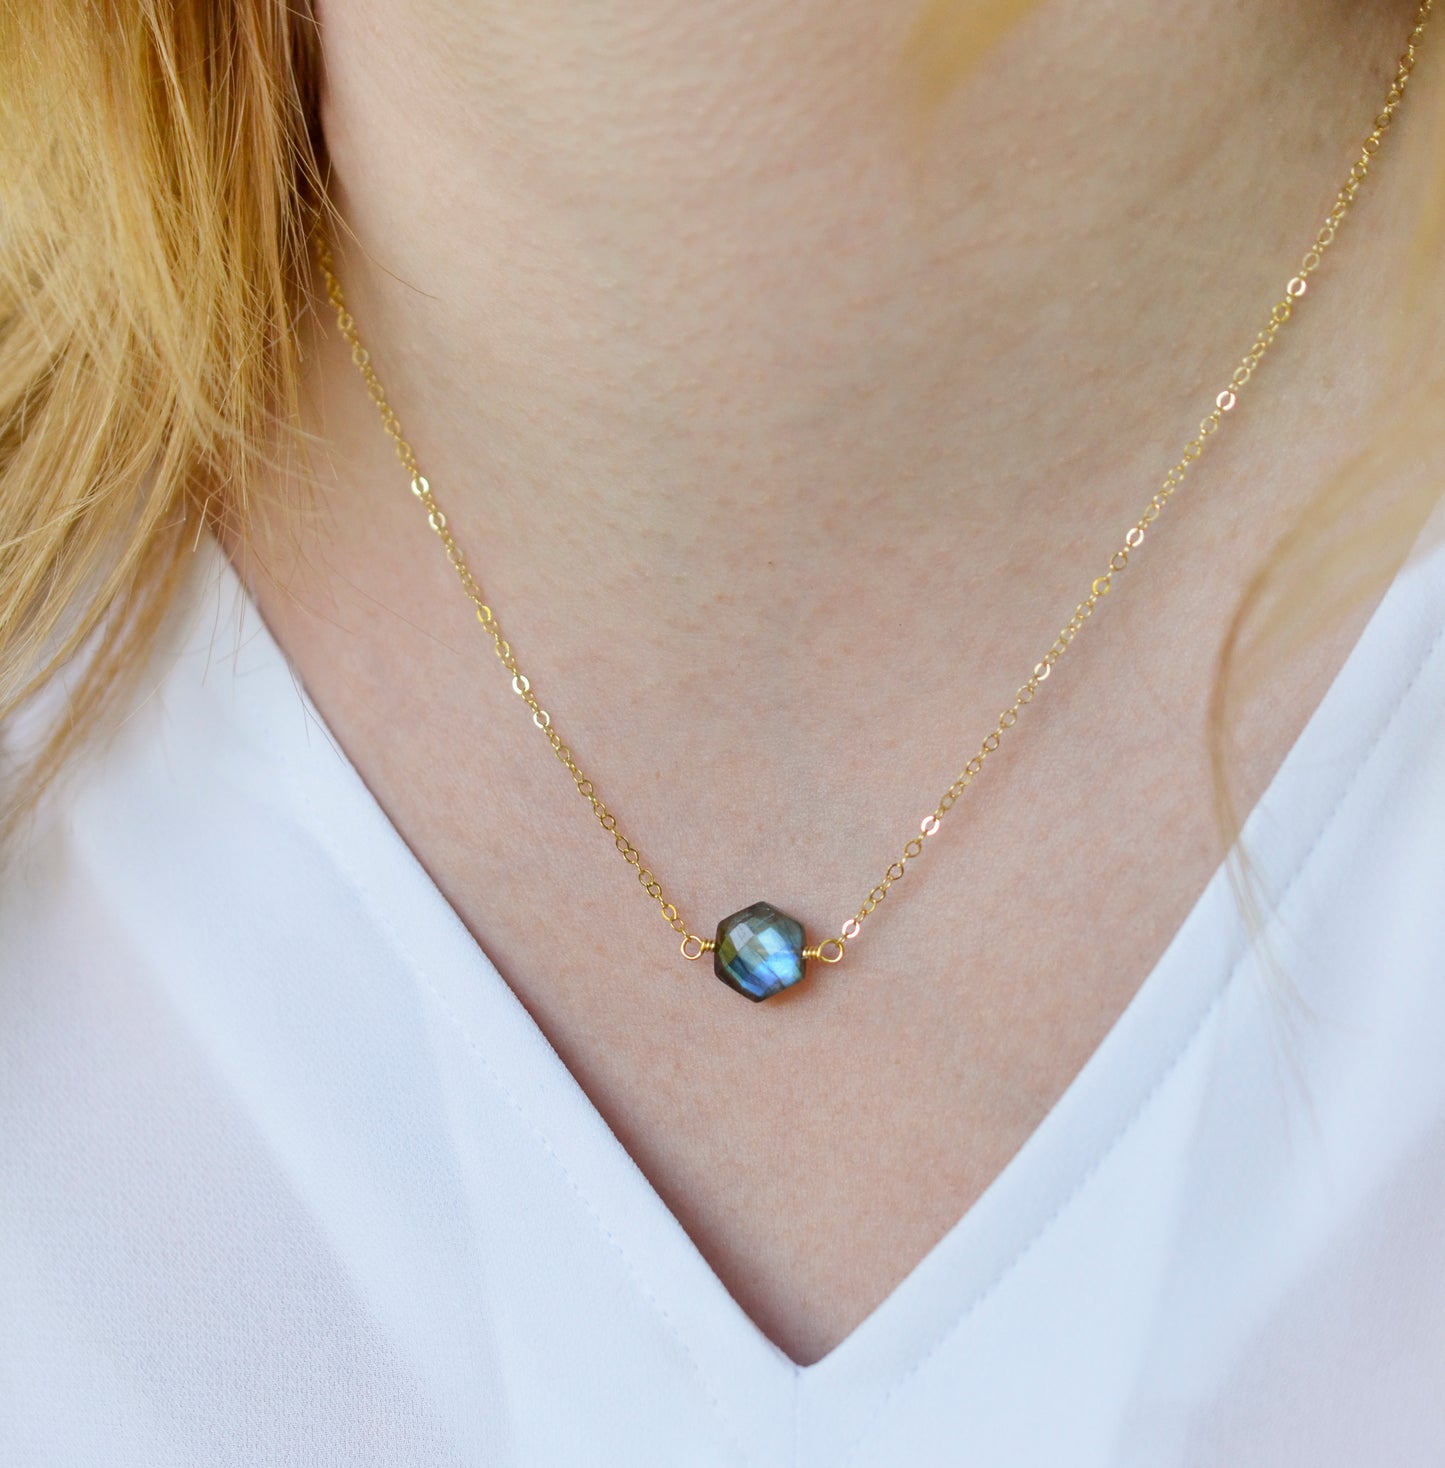 Labradorite Necklace, 14k Gold Filled or Sterling Silver, Natural Flash Labradorite Pendant, Dainty, Hexagonal, Gemstone Jewelry